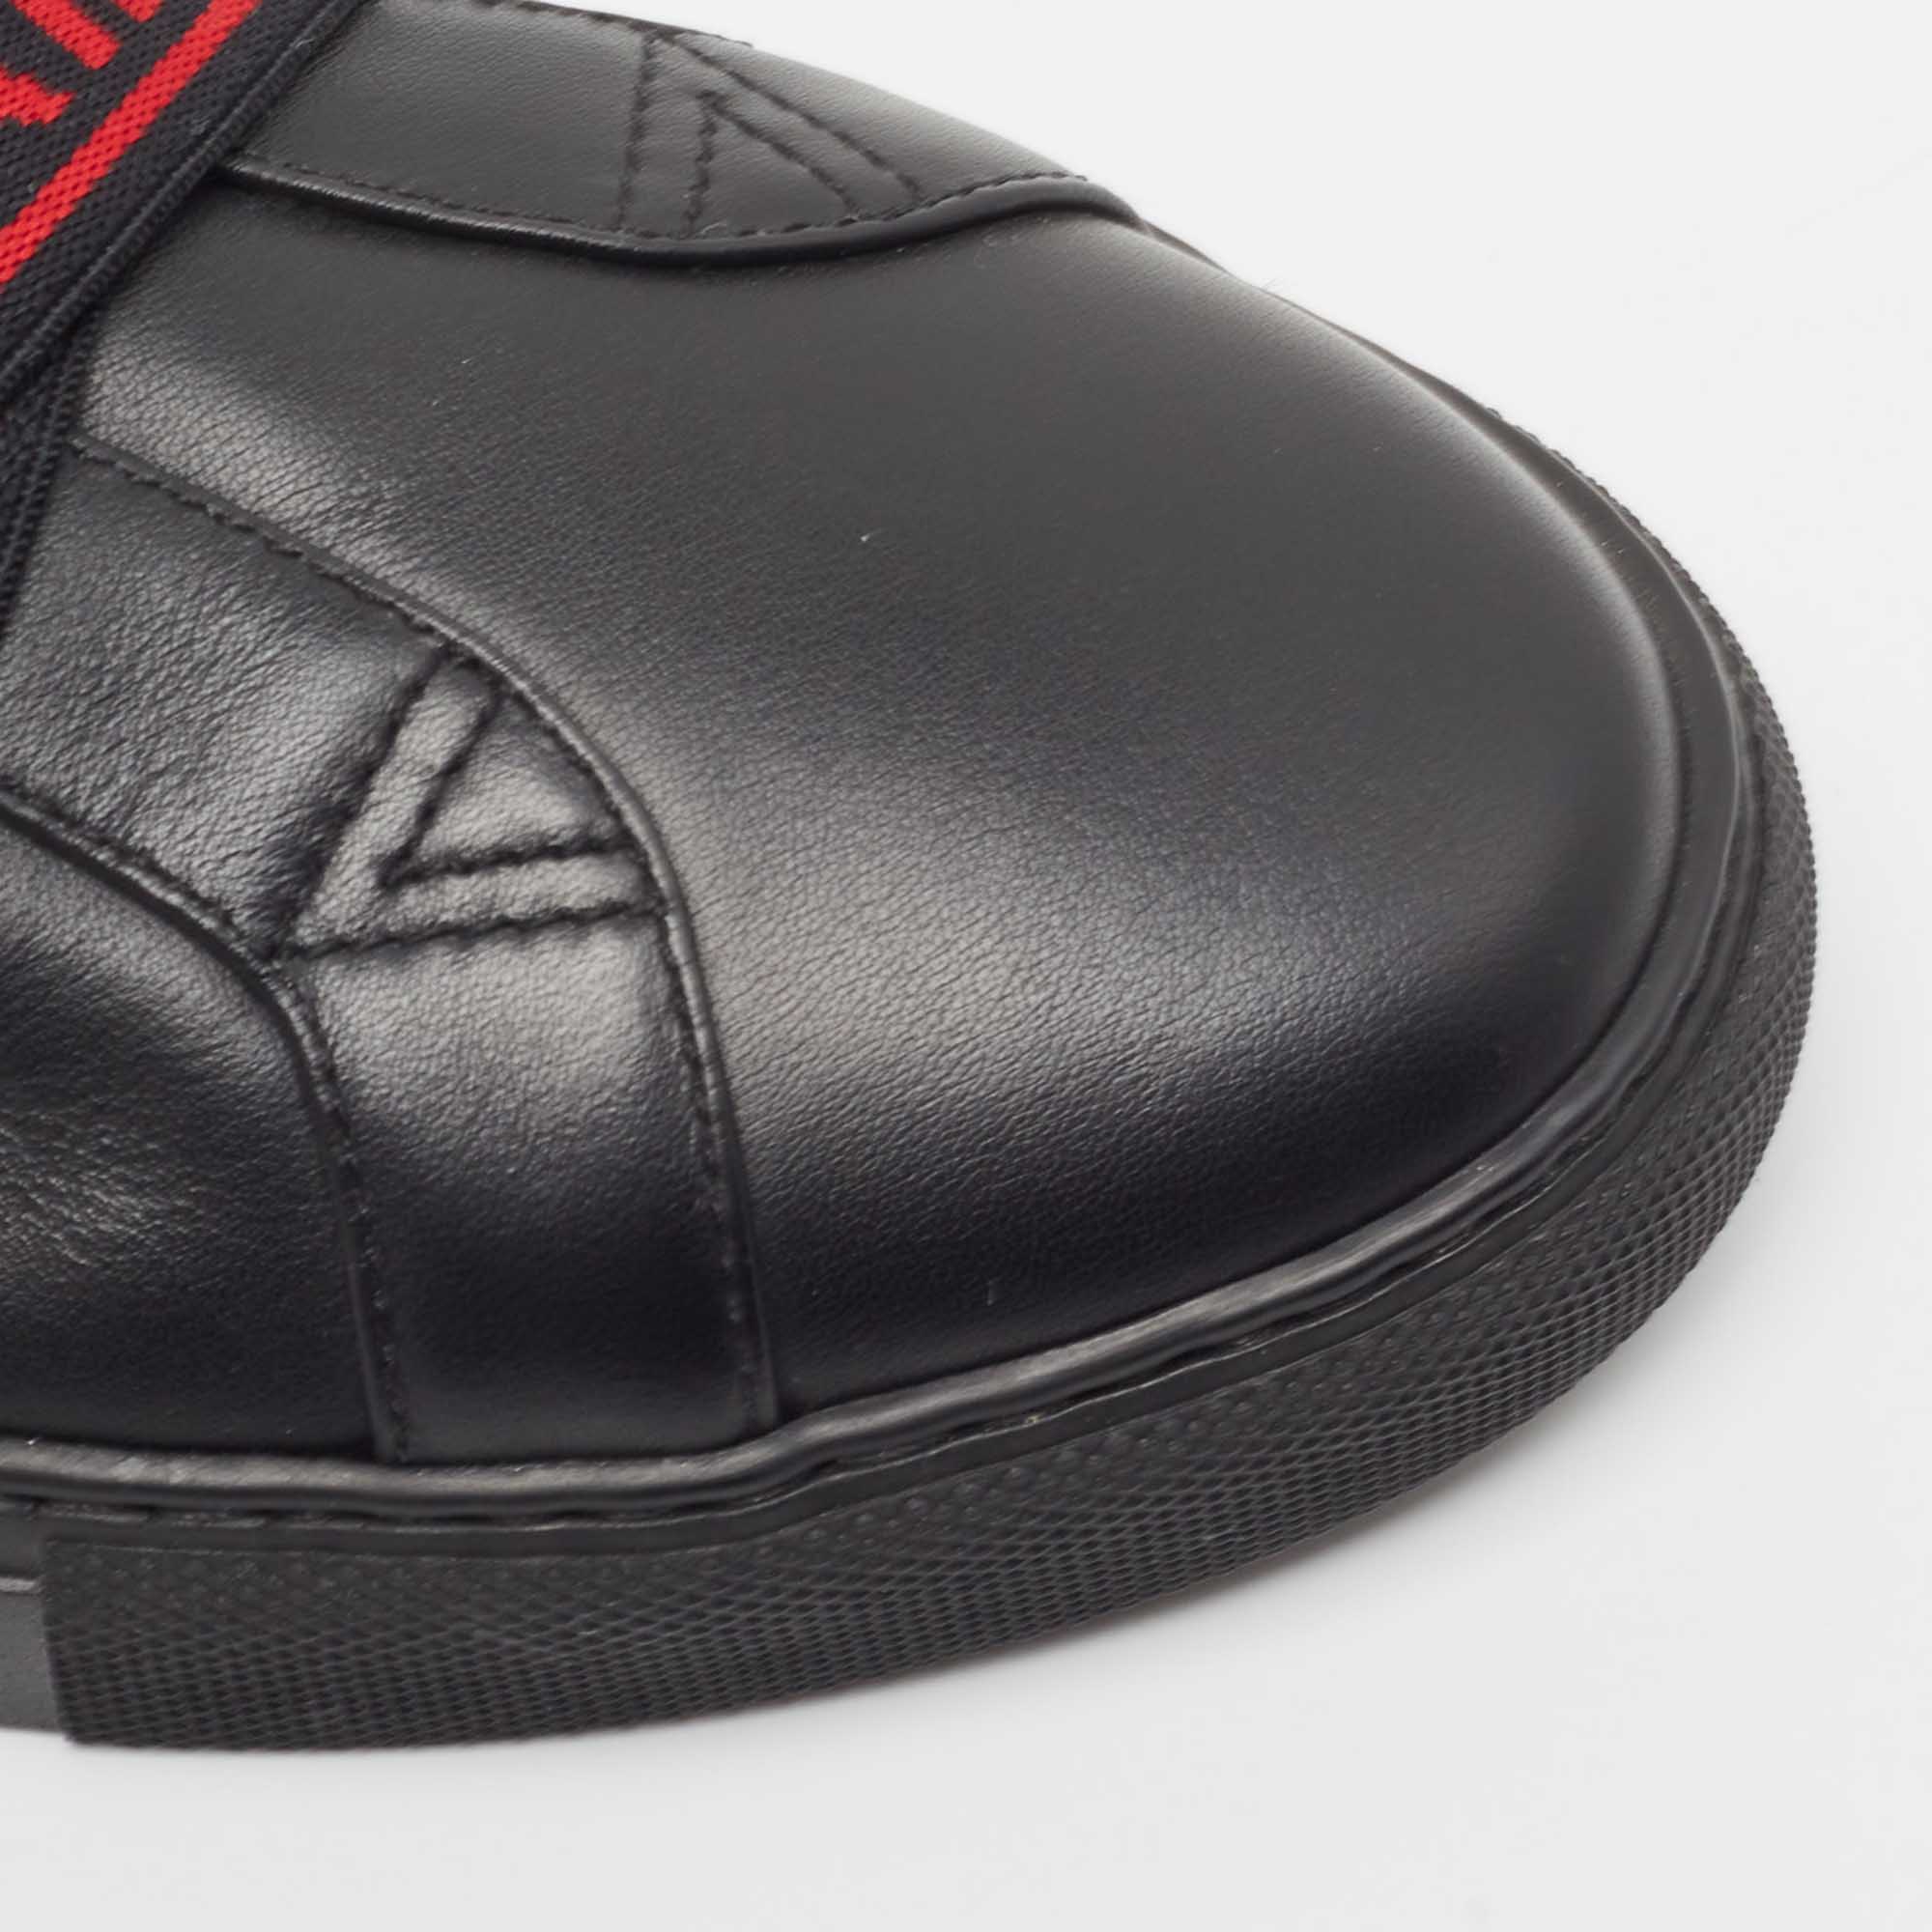 Balmain Black Leather Slip On Sneakers Size 39